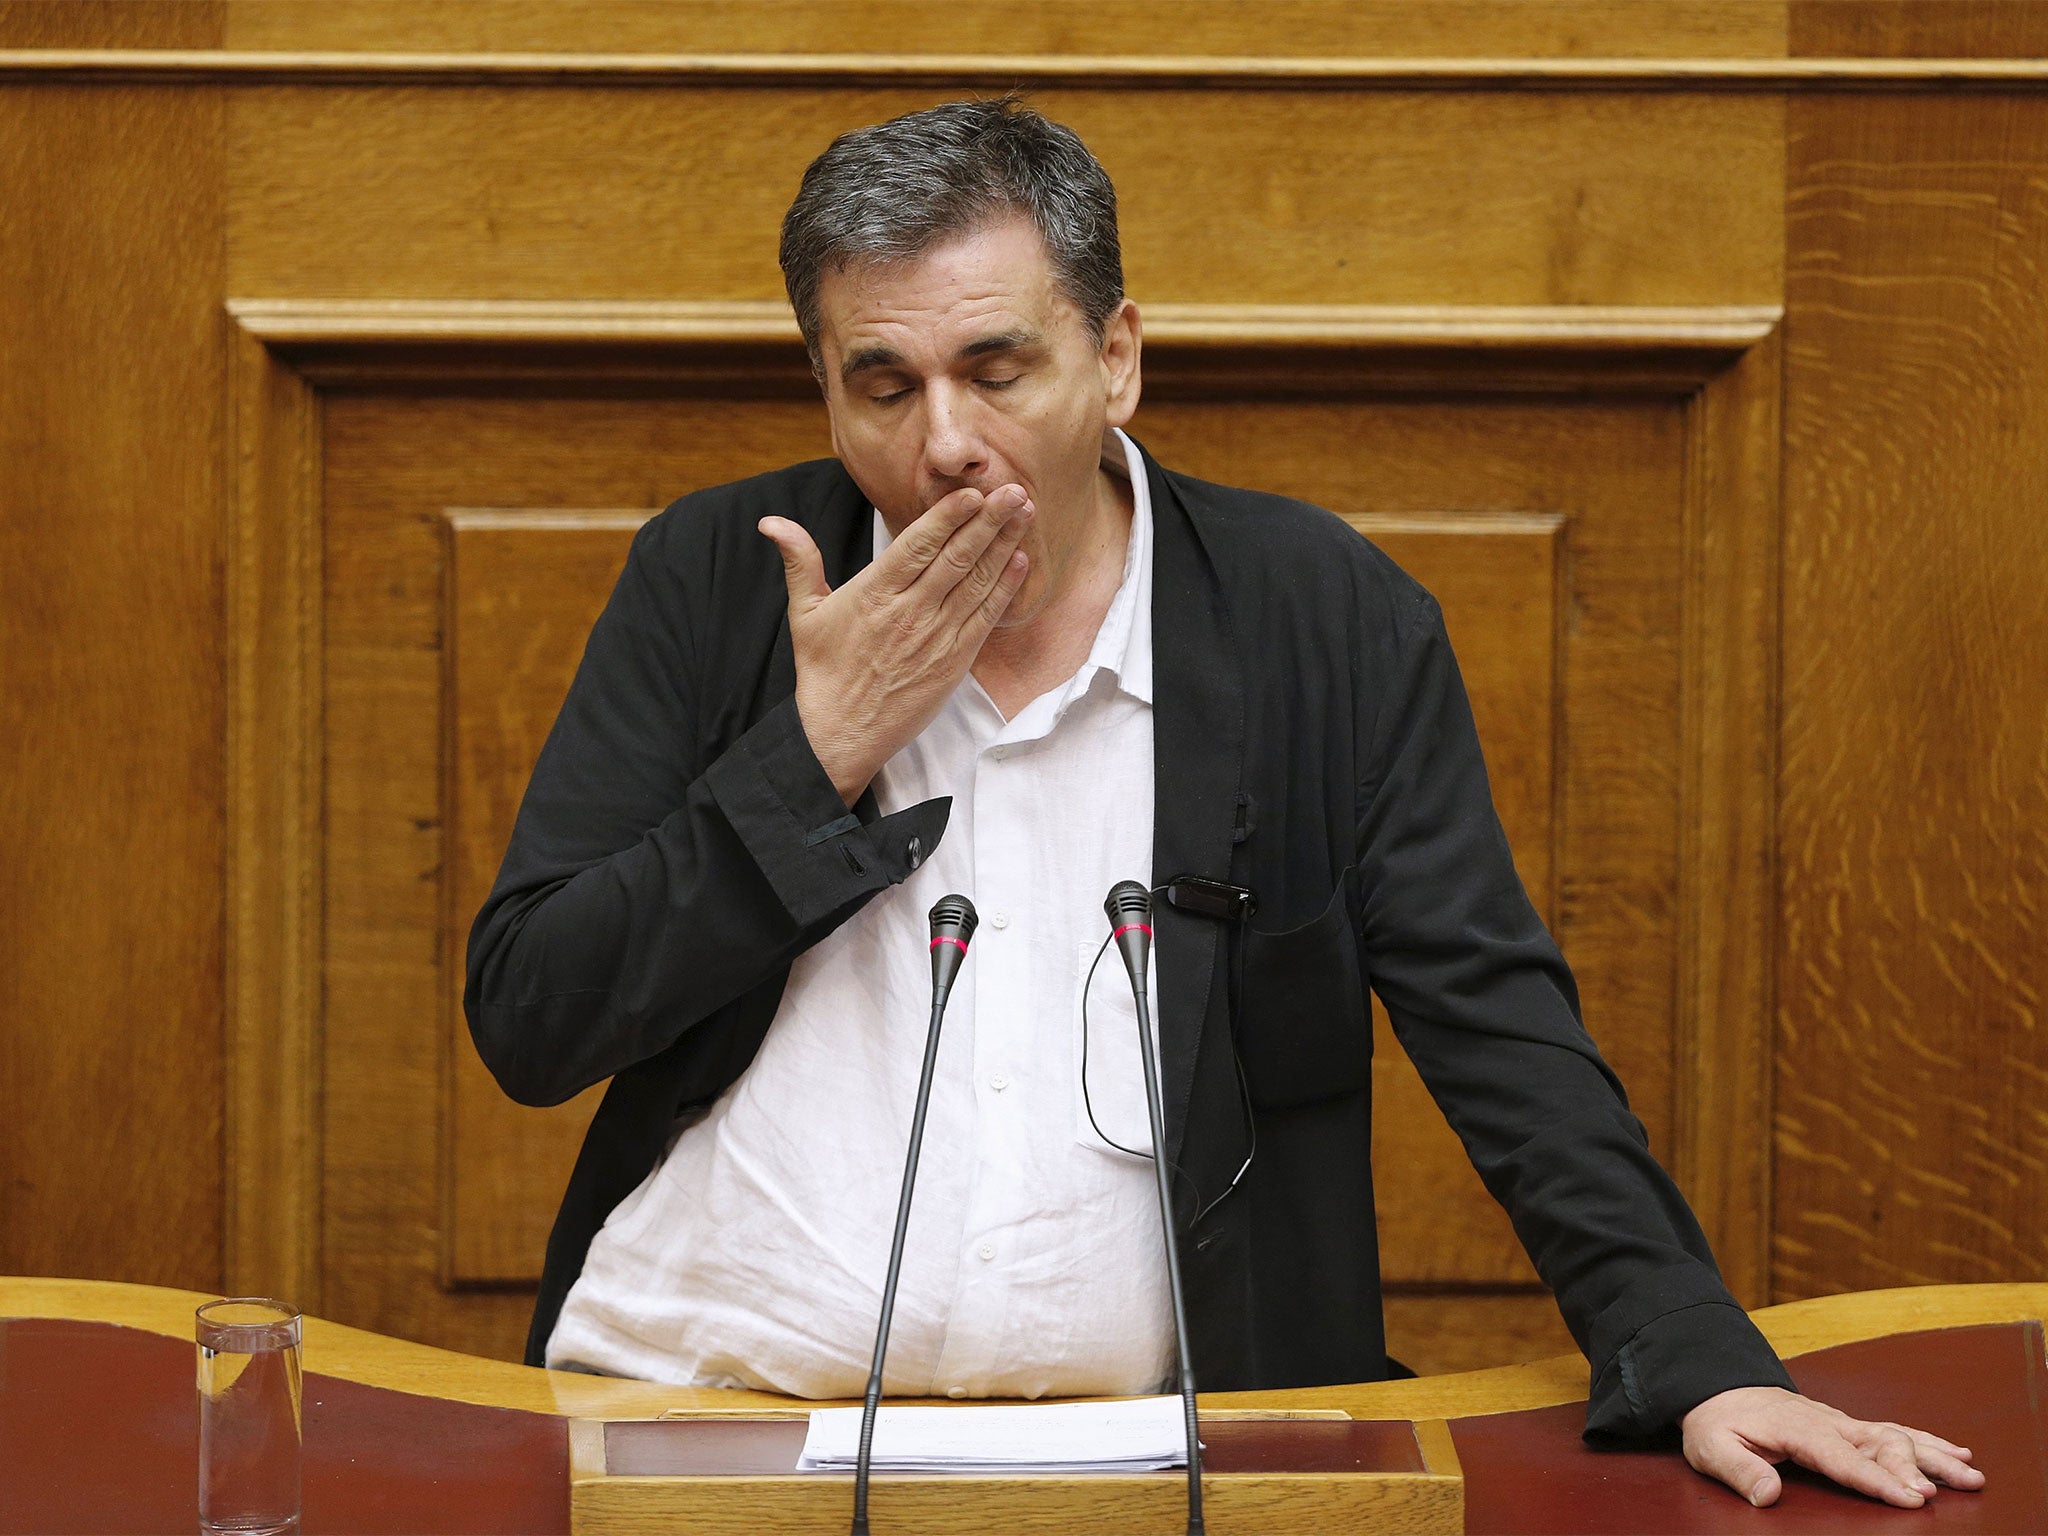 Euclid Tsakalotos during the all-night talks in Athens